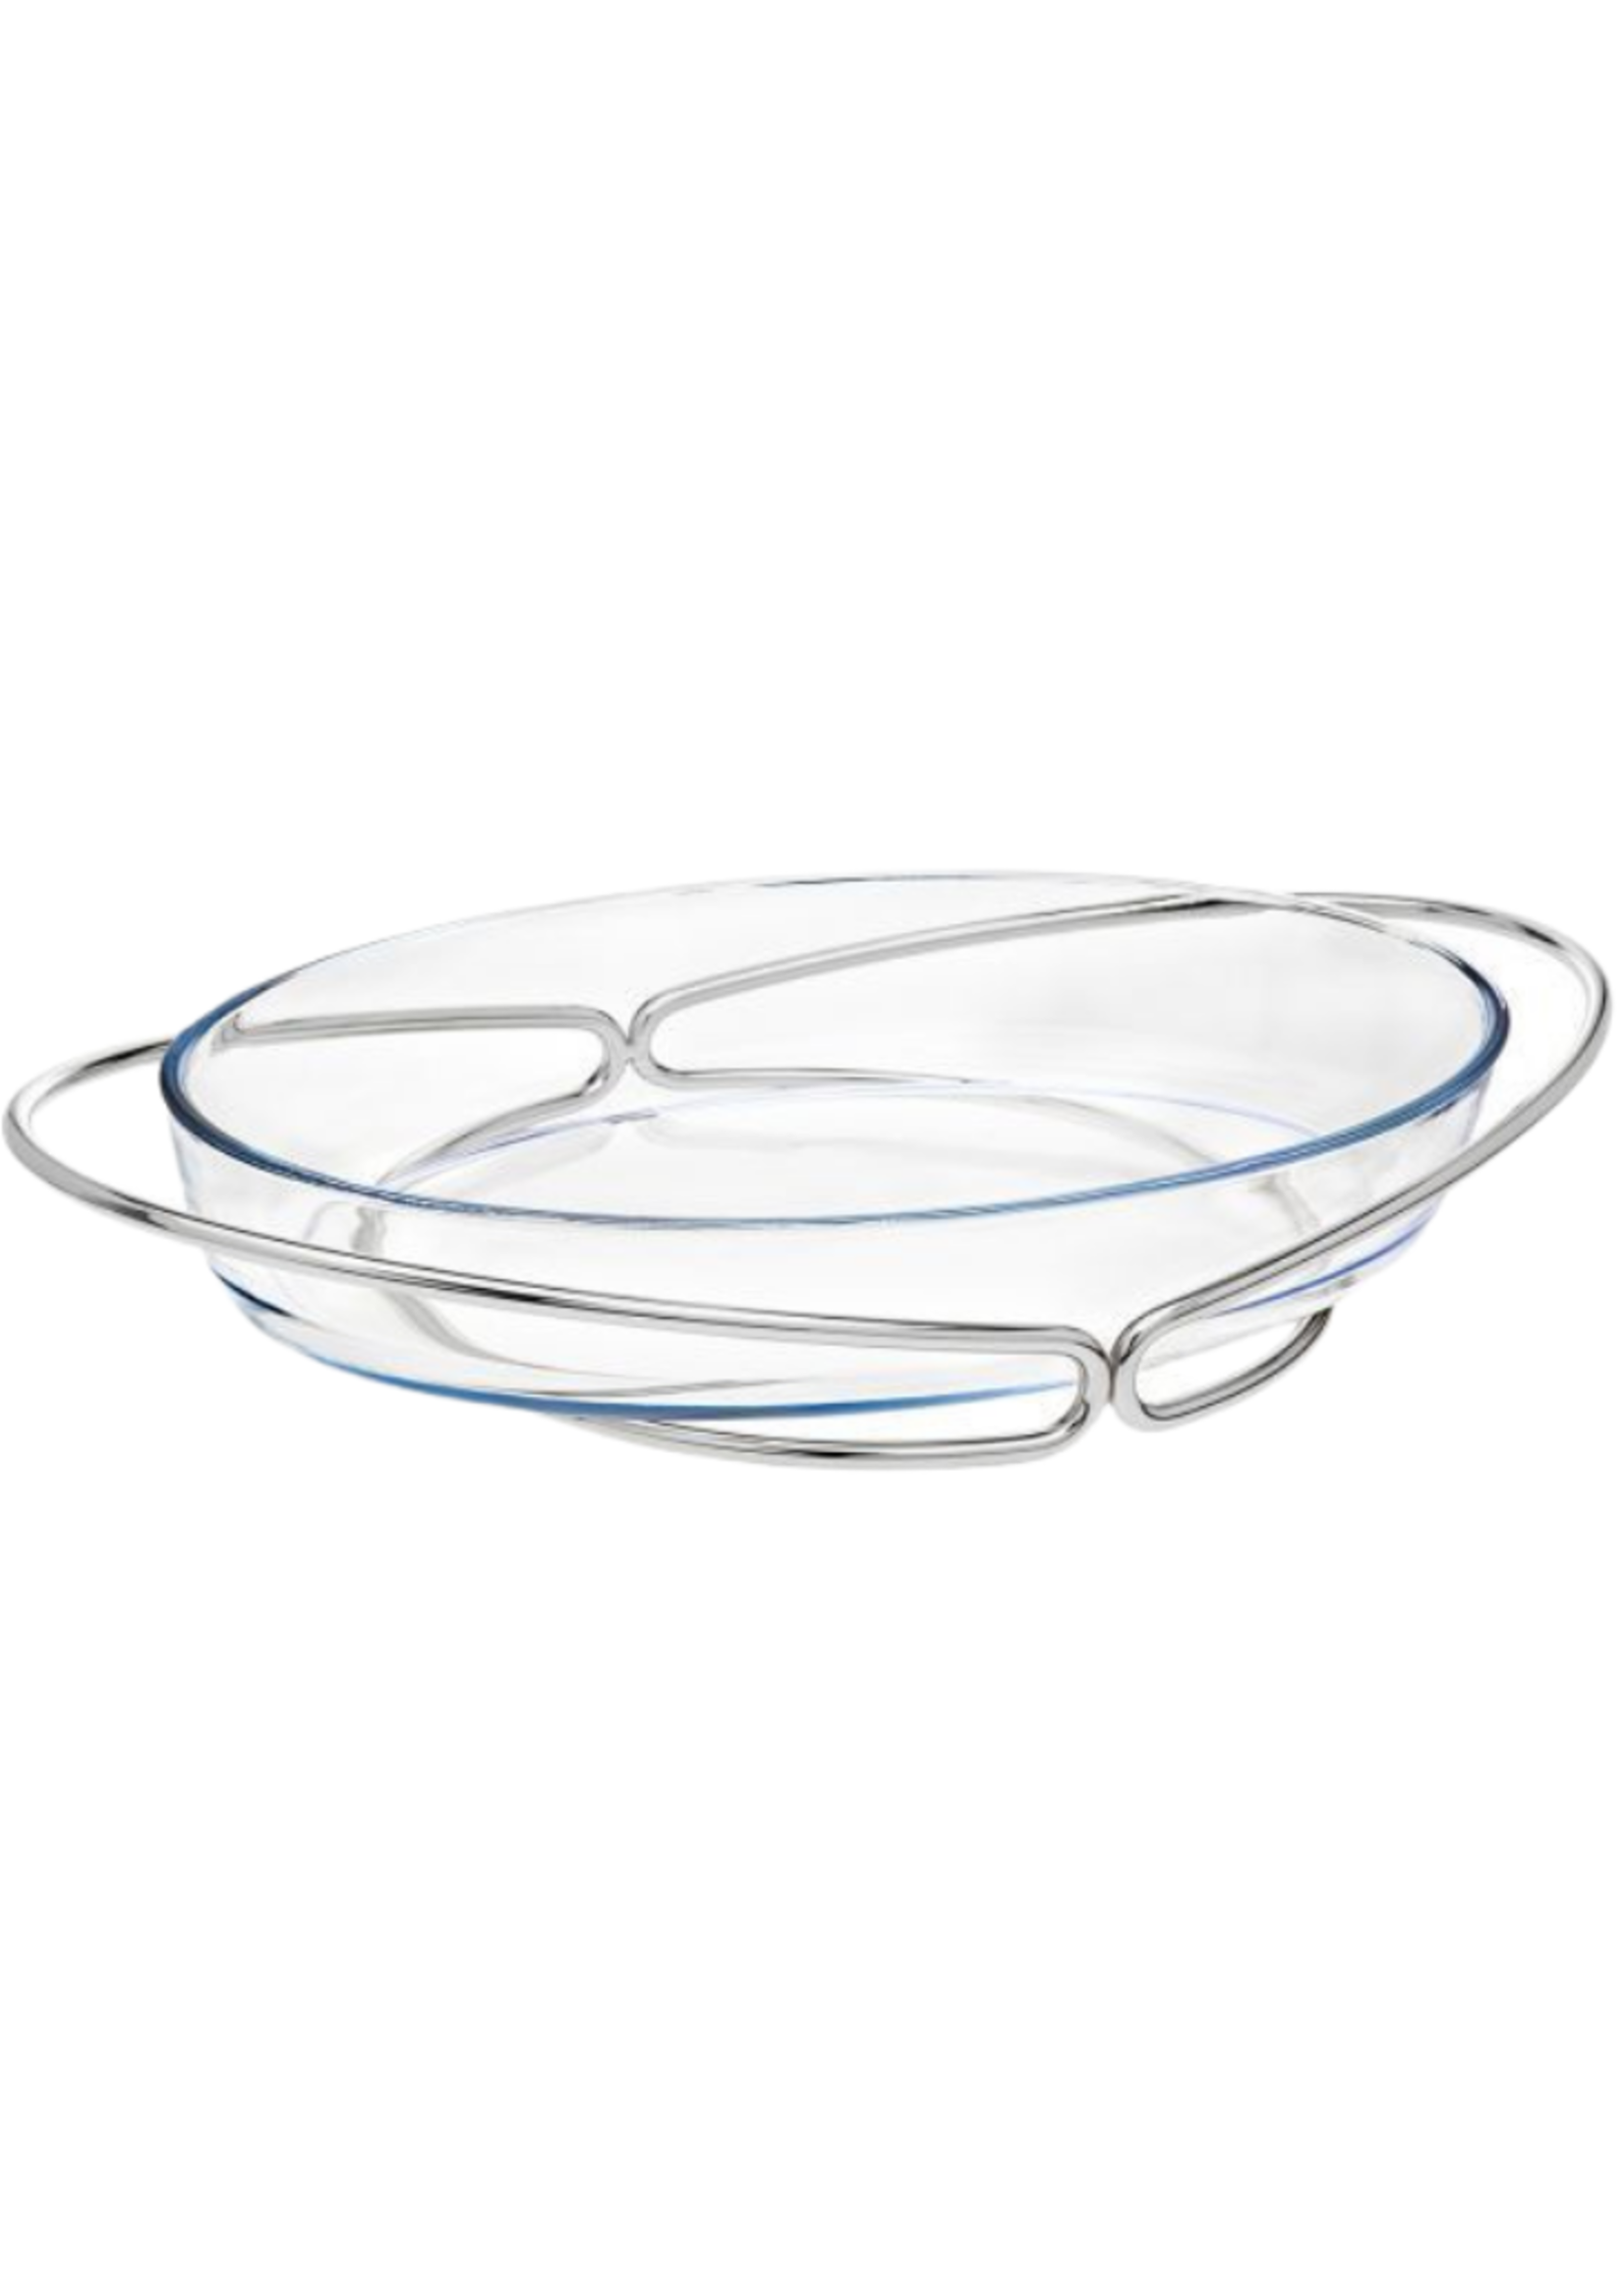 Infinity Nickel - 3QT Glass Oval